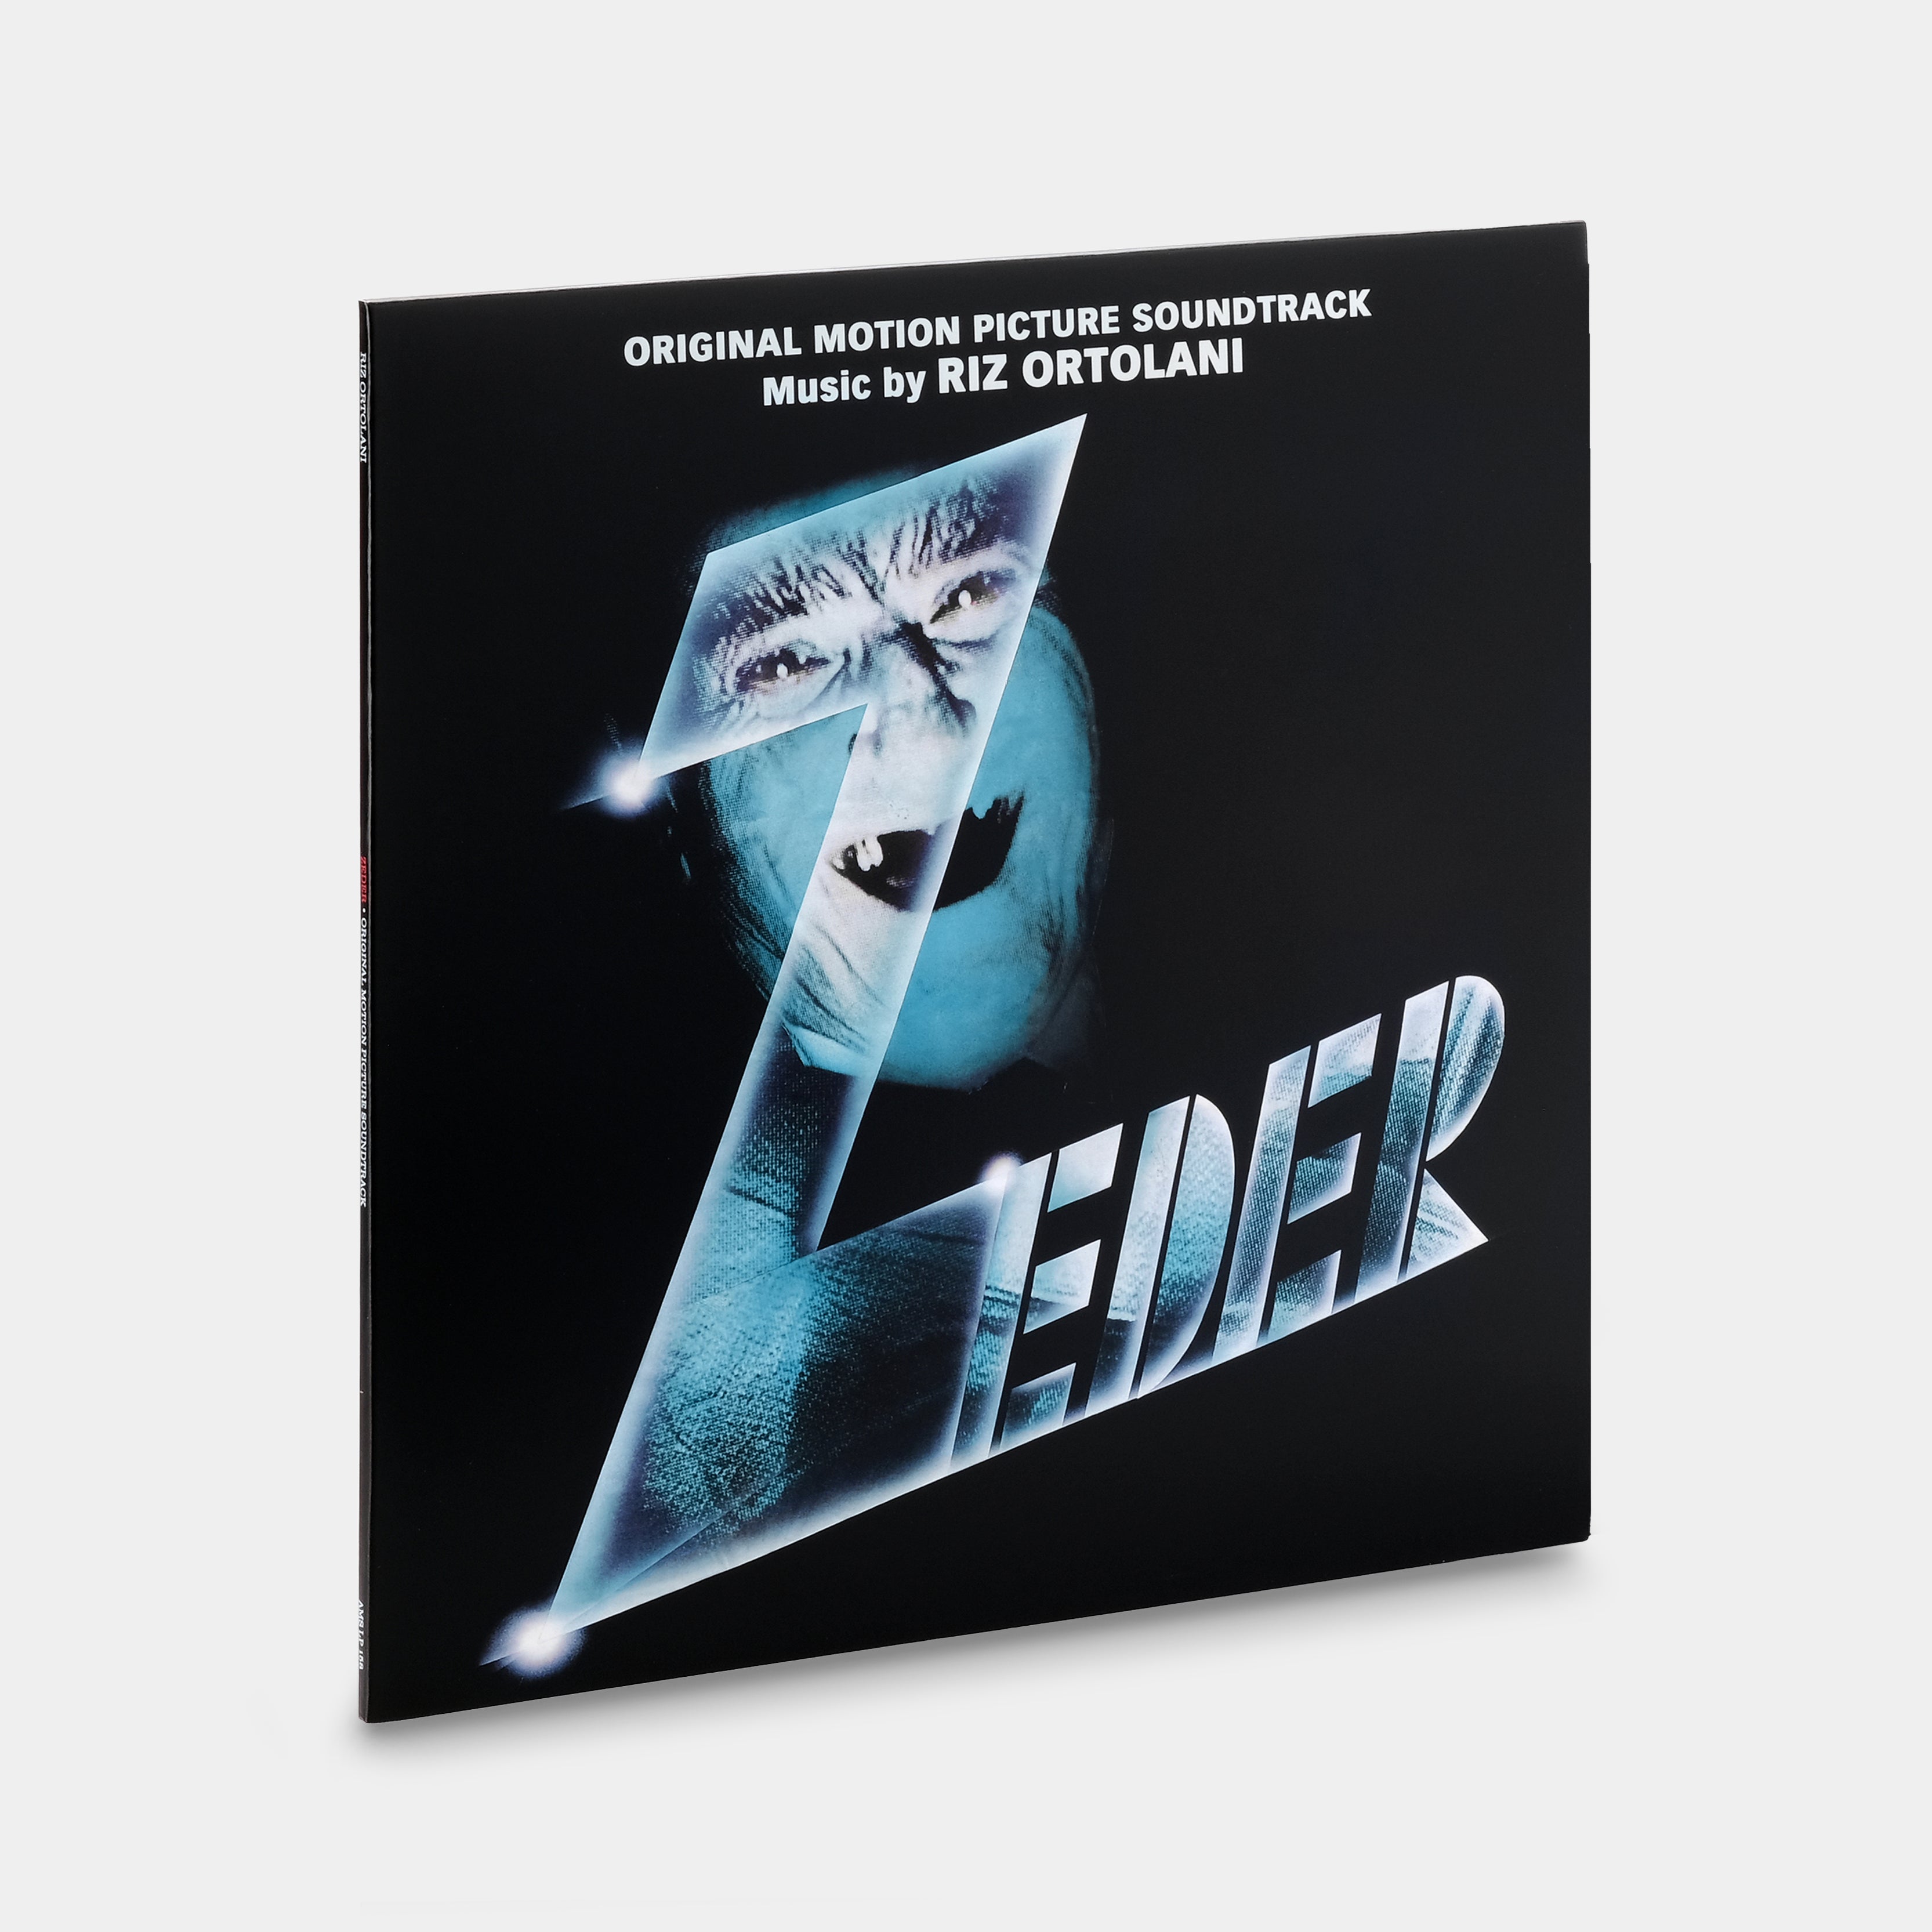 Riz Ortolani - Zeder (Original Motion Picture Soundtrack) LP Vinyl Record